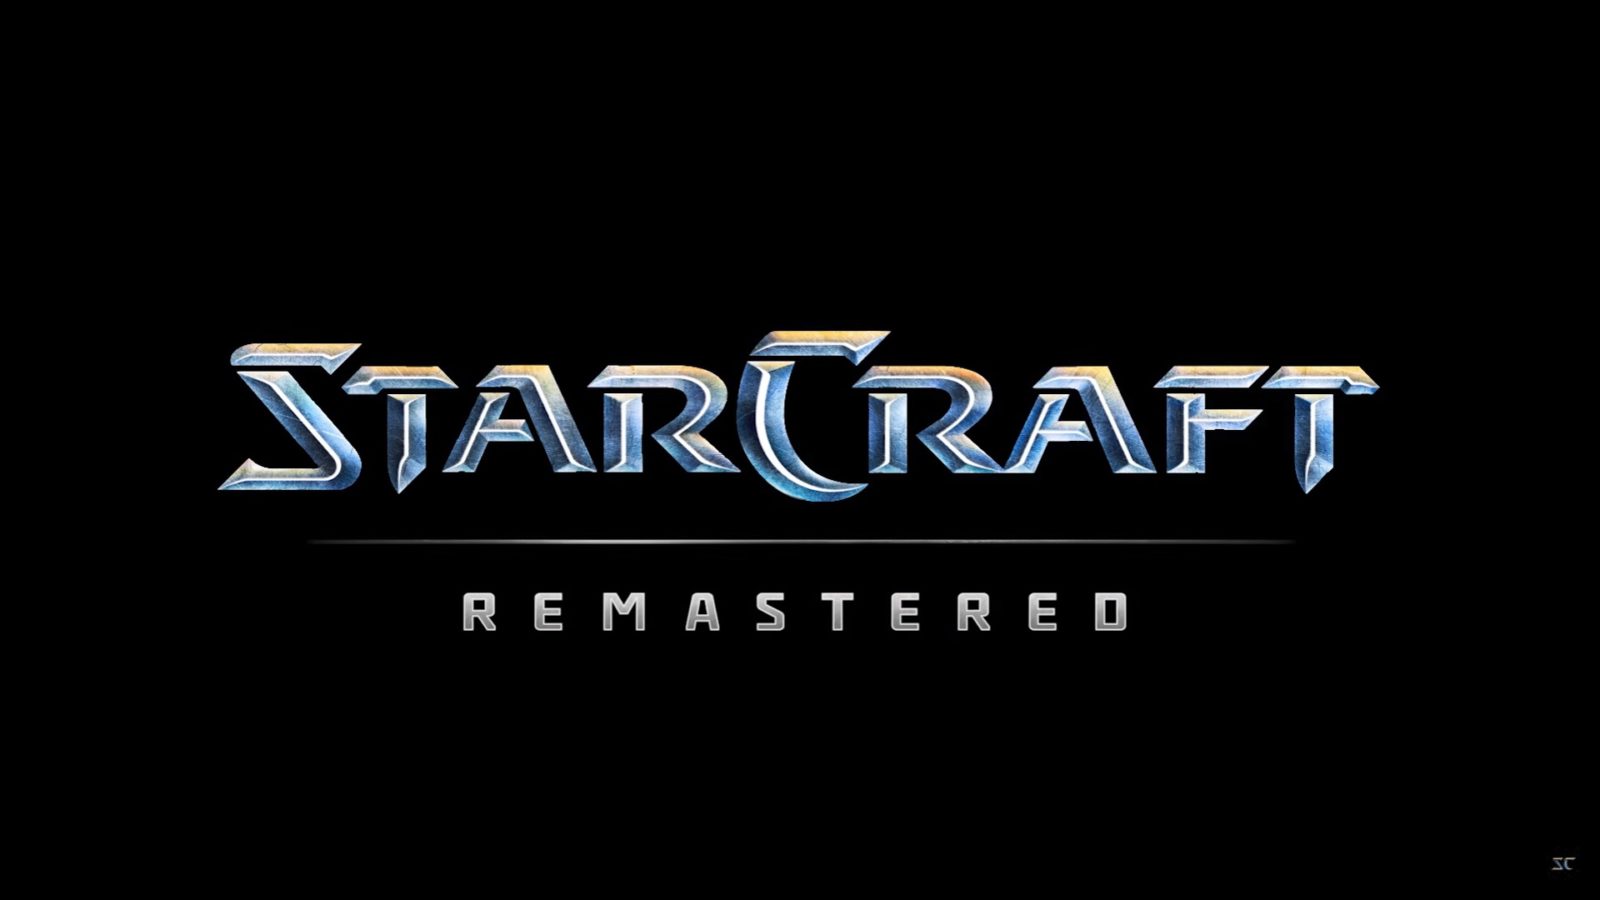 StarCraft: Remastered announcement trailer YouTube screenshot